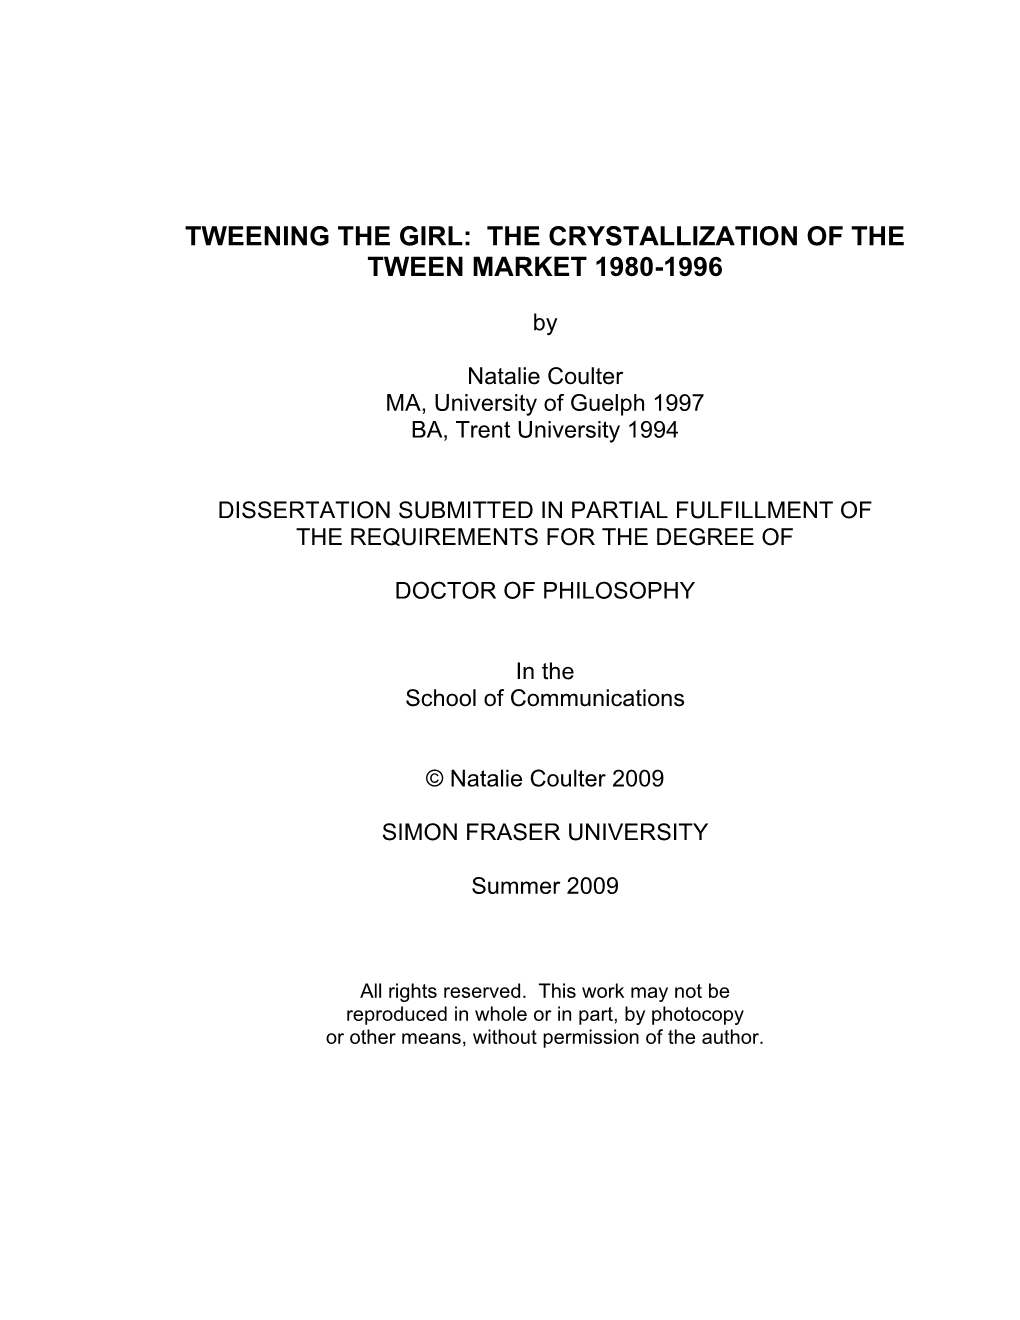 The Crystallization of the Tween Market 1980-1996